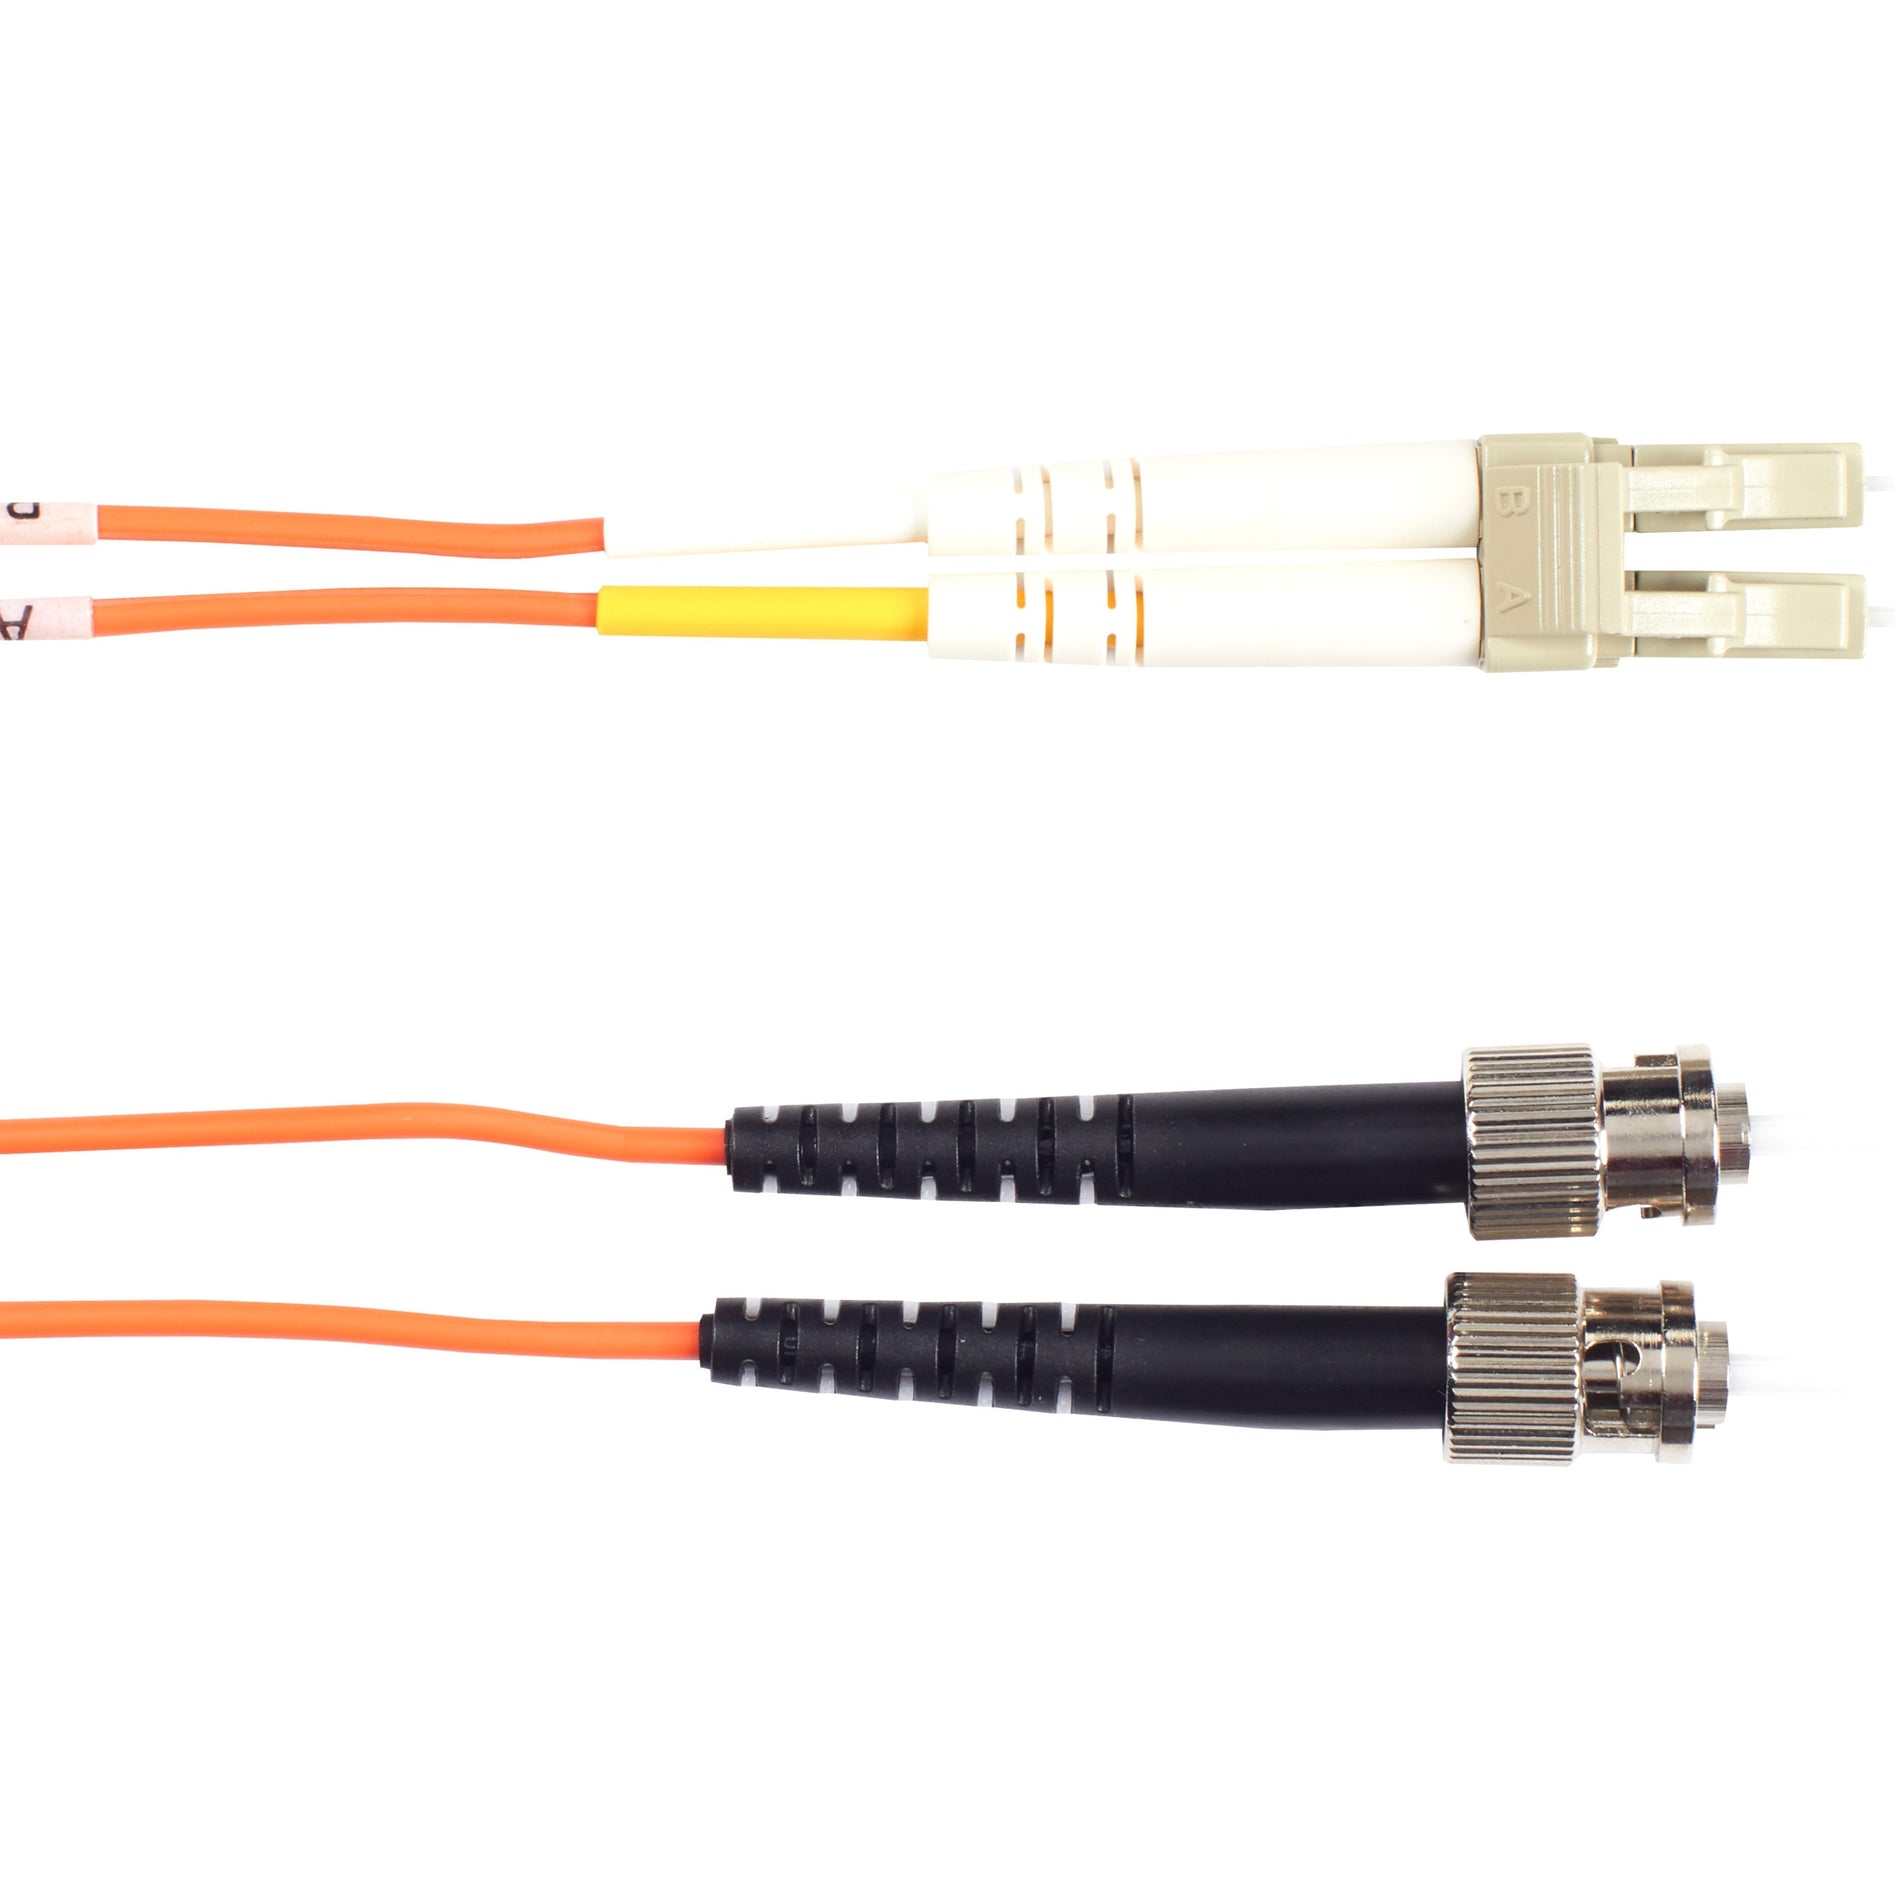 Black Box EFN110-003M-STLC Fiber Optic Duplex Patch Network Cable, Multi-mode, 9.80 ft, Orange